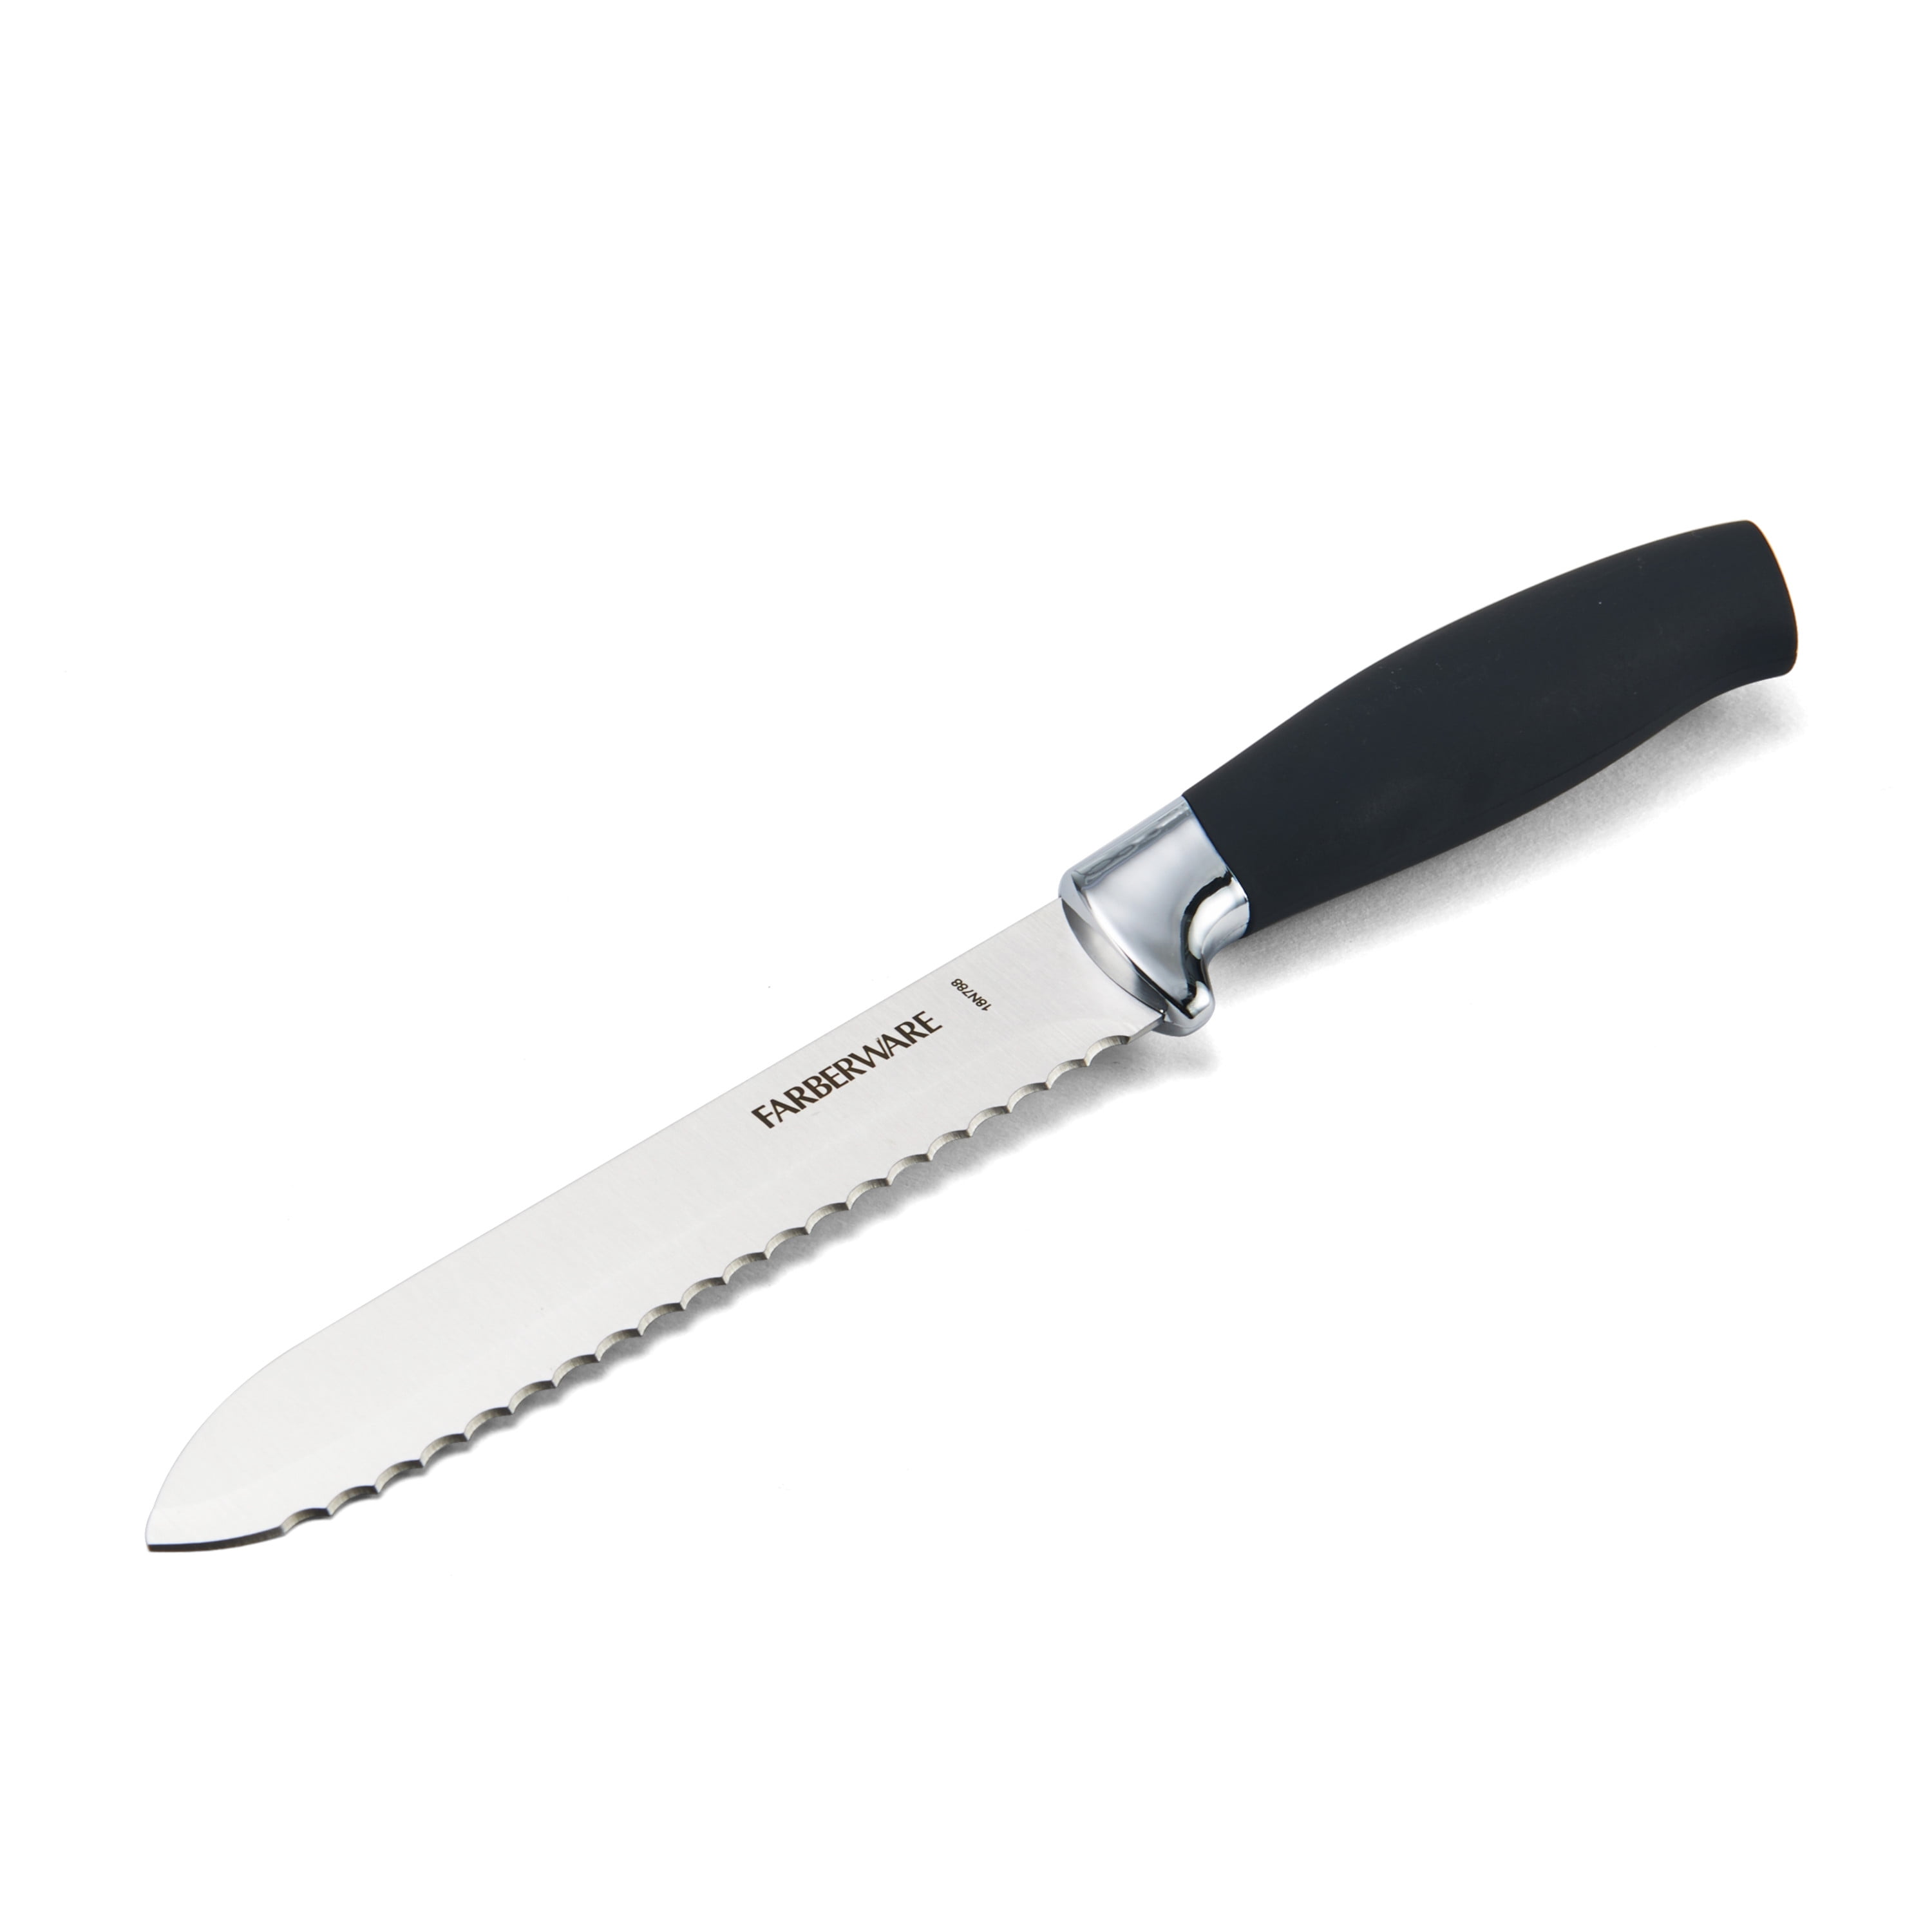 Faberware Professional 5 Ceramic Utility Kitchen Knife With Blade